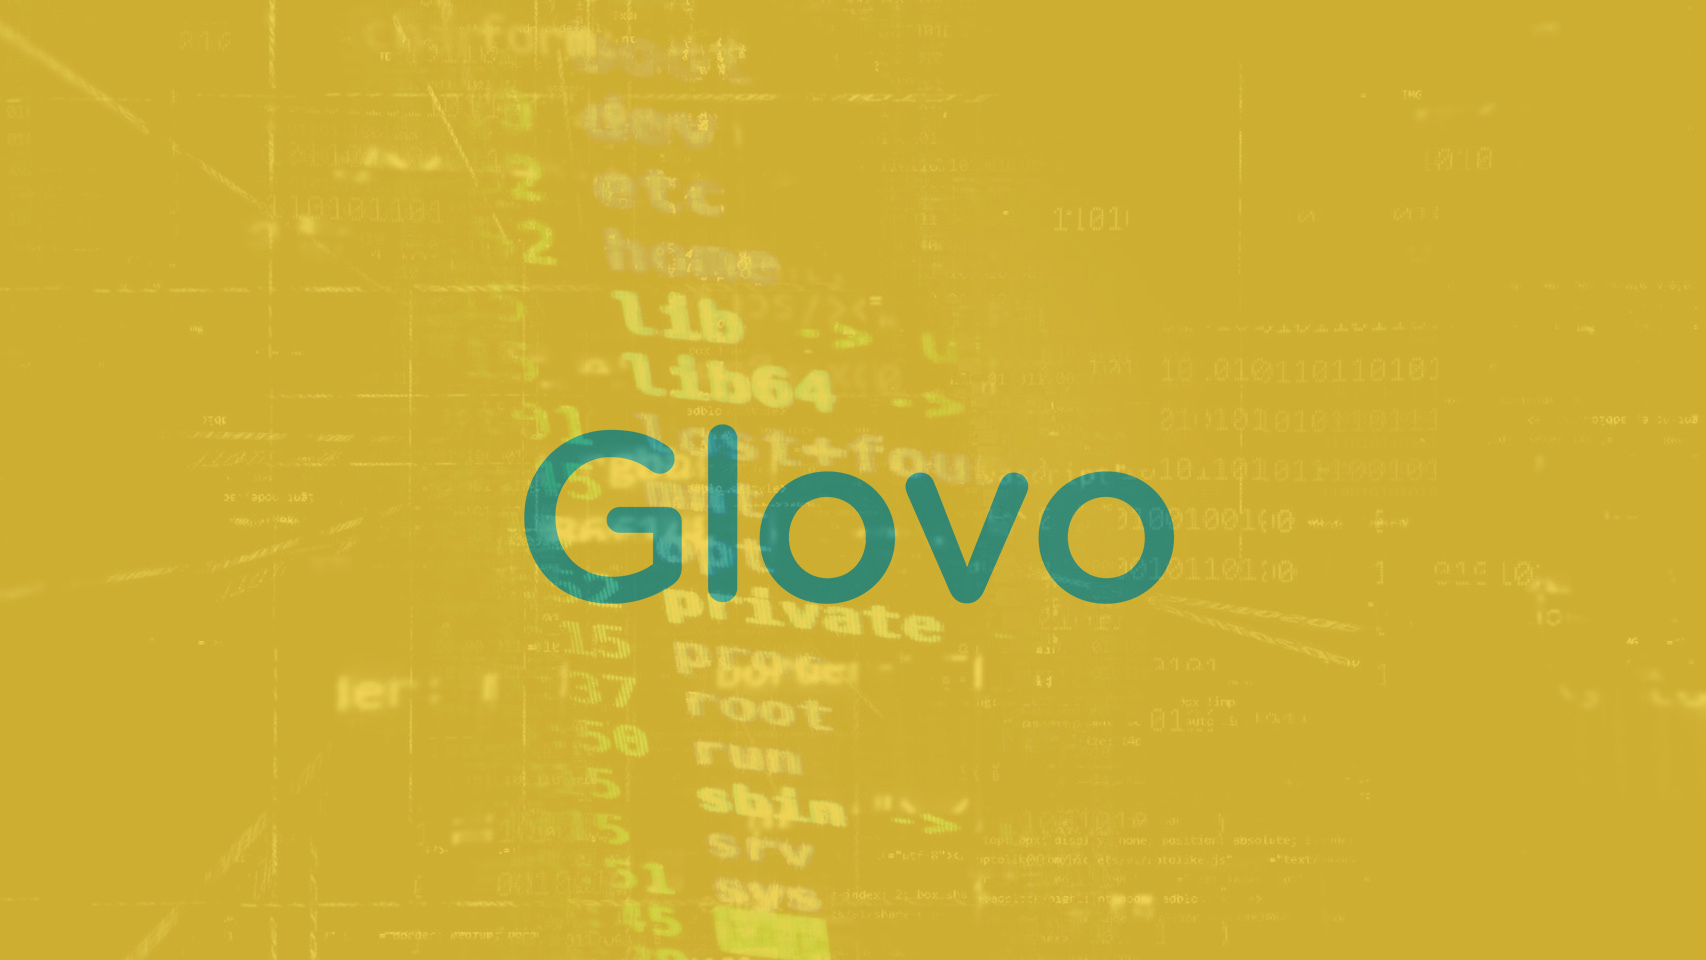 Logo de Glovo.